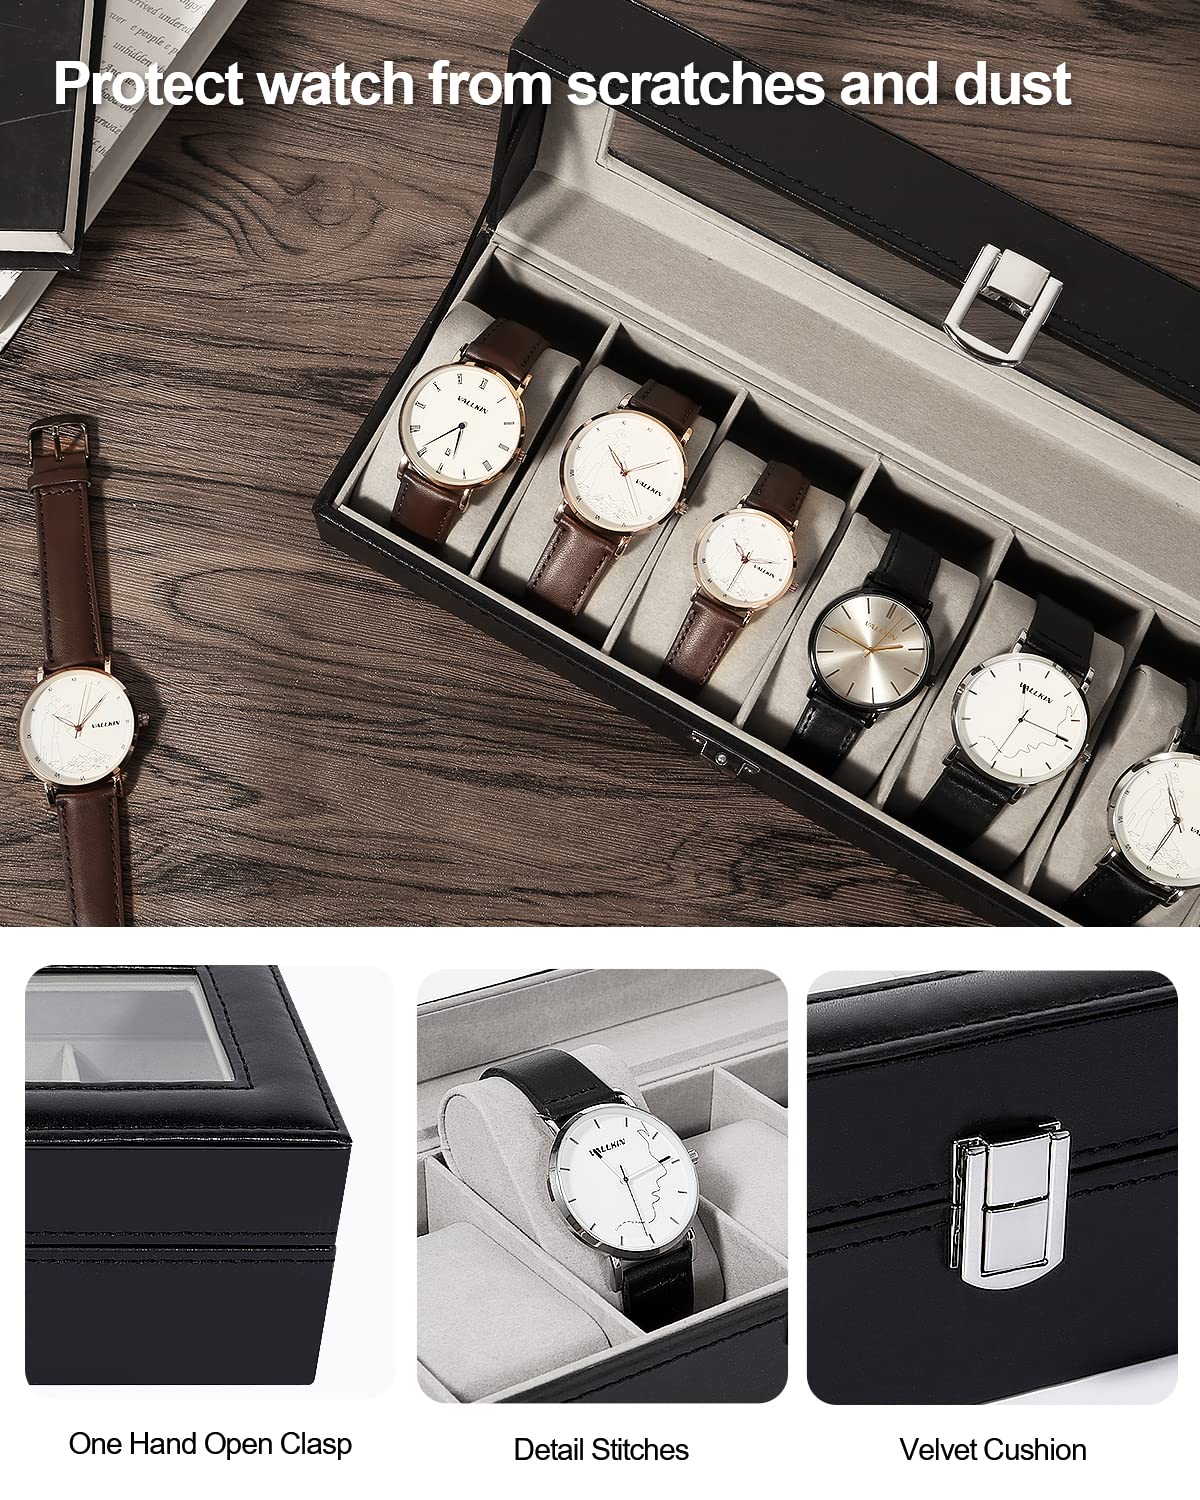 Uten Watch Boxes 6 Slots, Watch Display Storage Box PU Jewelry Collection Case Organiser Holder